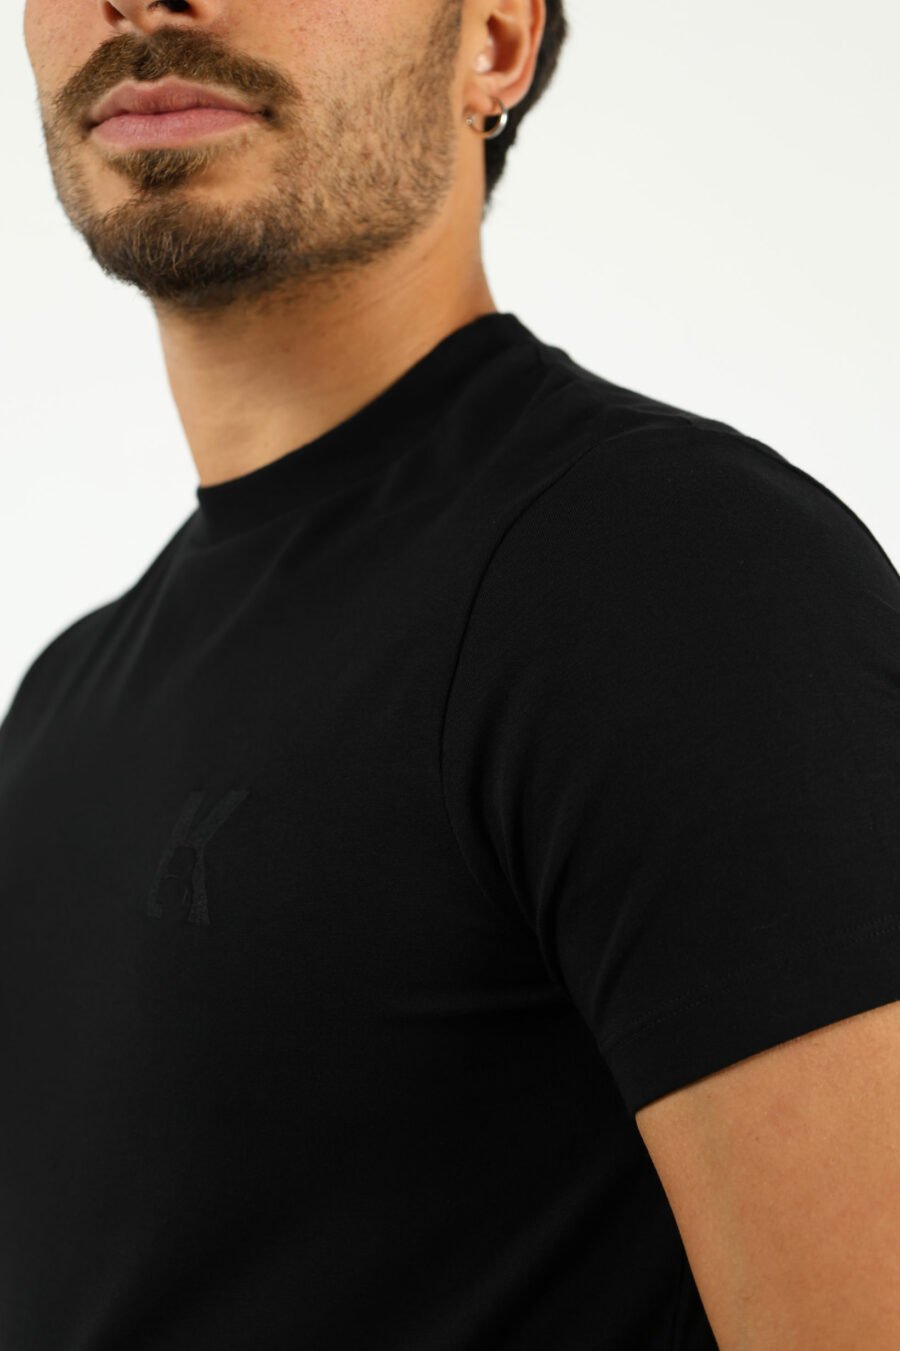 Camiseta negra con minilogo negro en goma - number14142